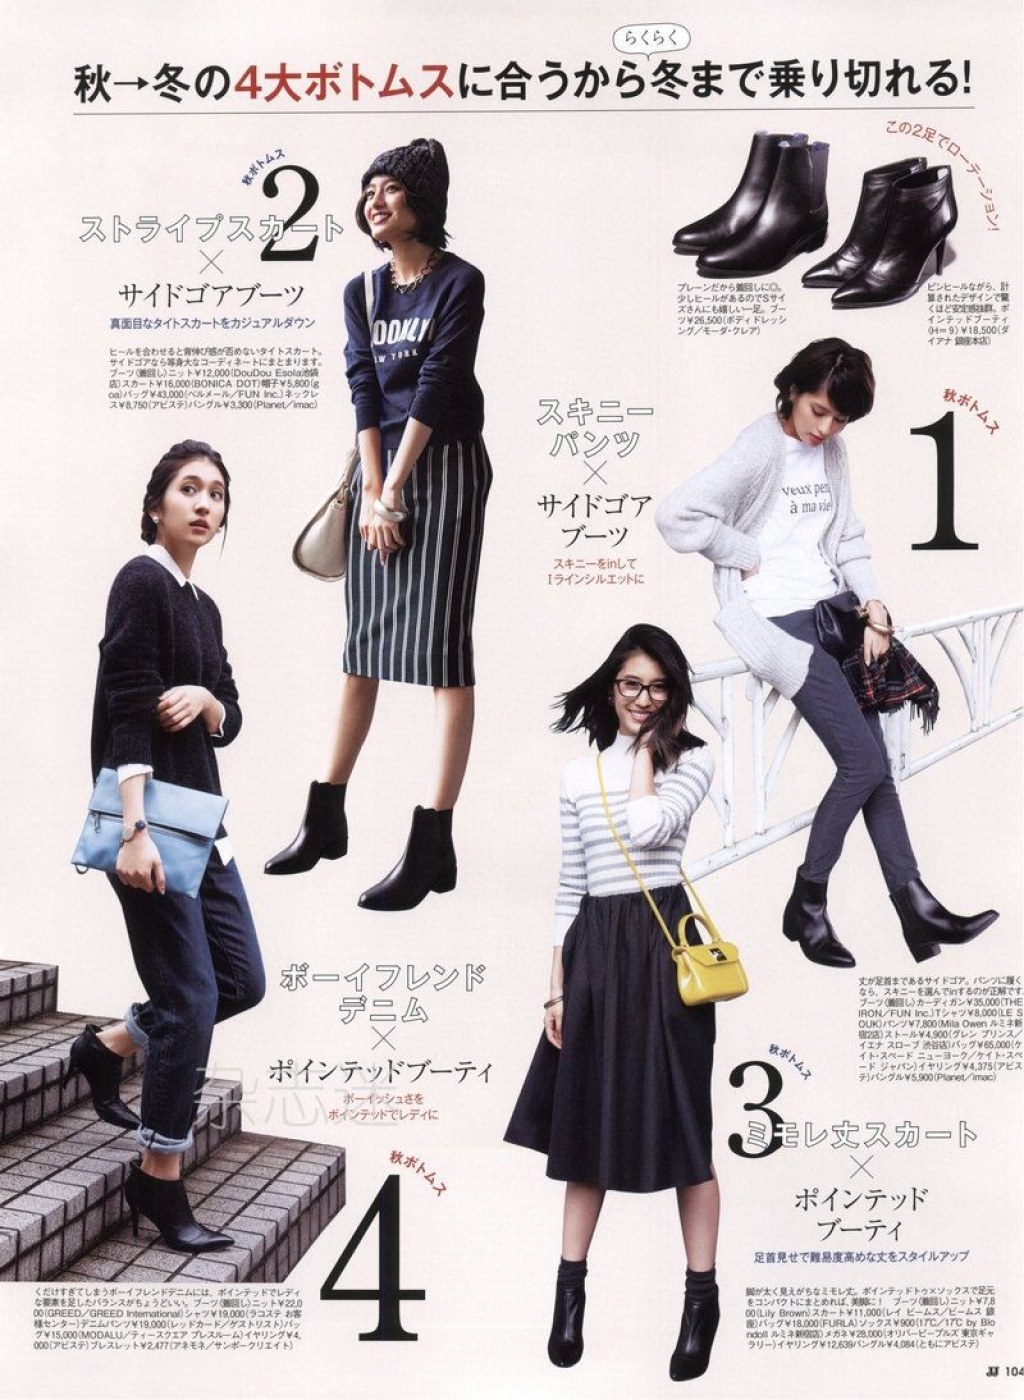 boots japan fashion - Black ankle boots  Japan fashion, Fashion, Japanese fashion